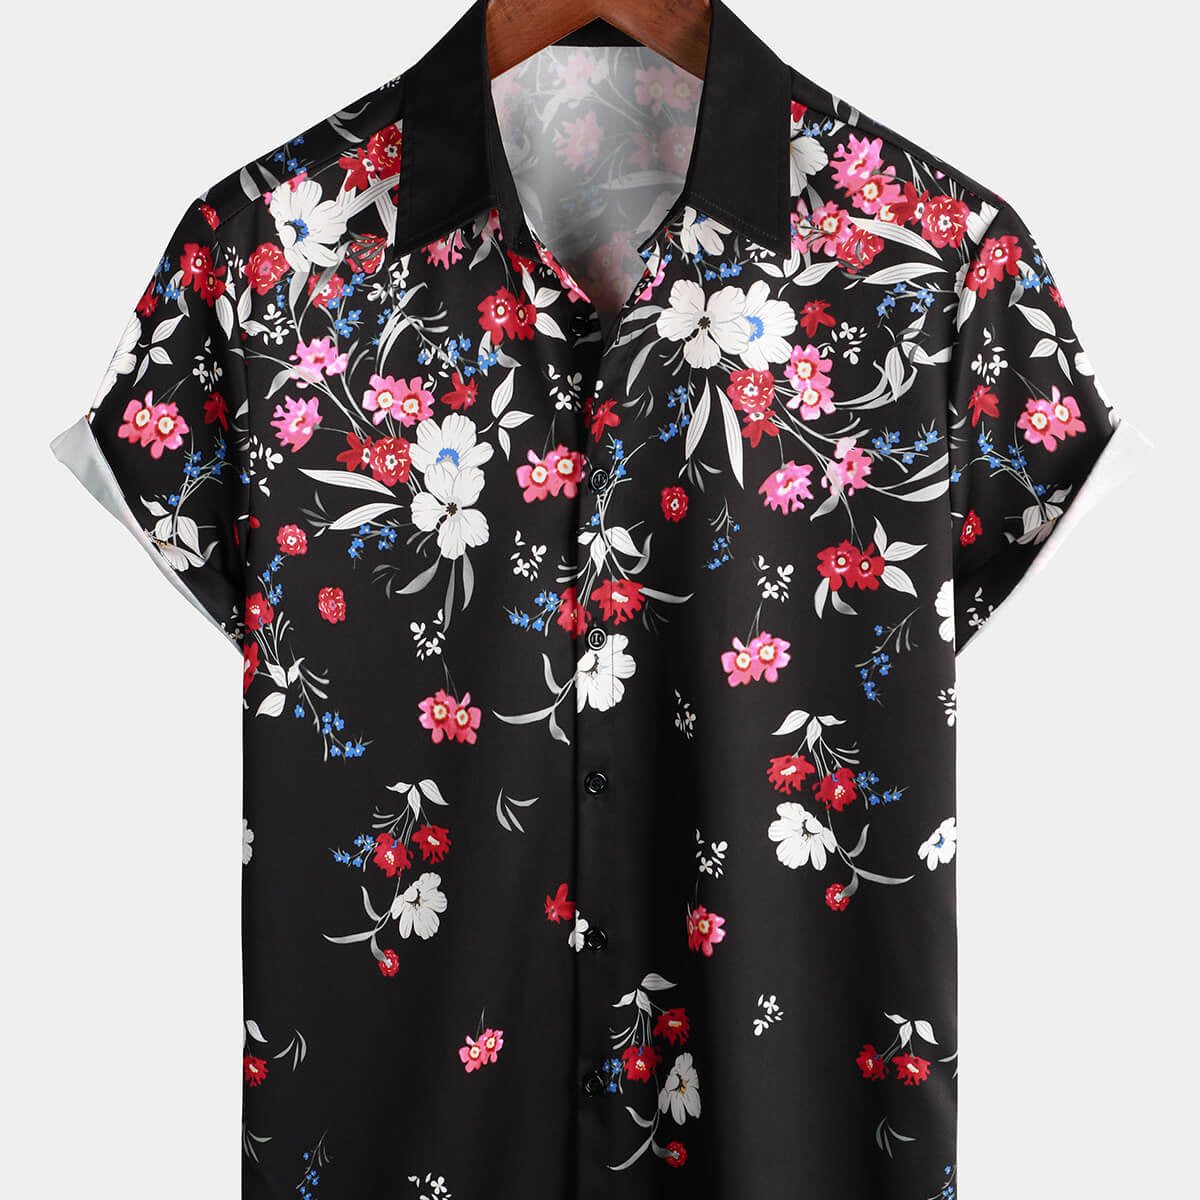 Men's Pink Floral Vacation Short Sleeve Button Camp Black Hawaiian Shirt